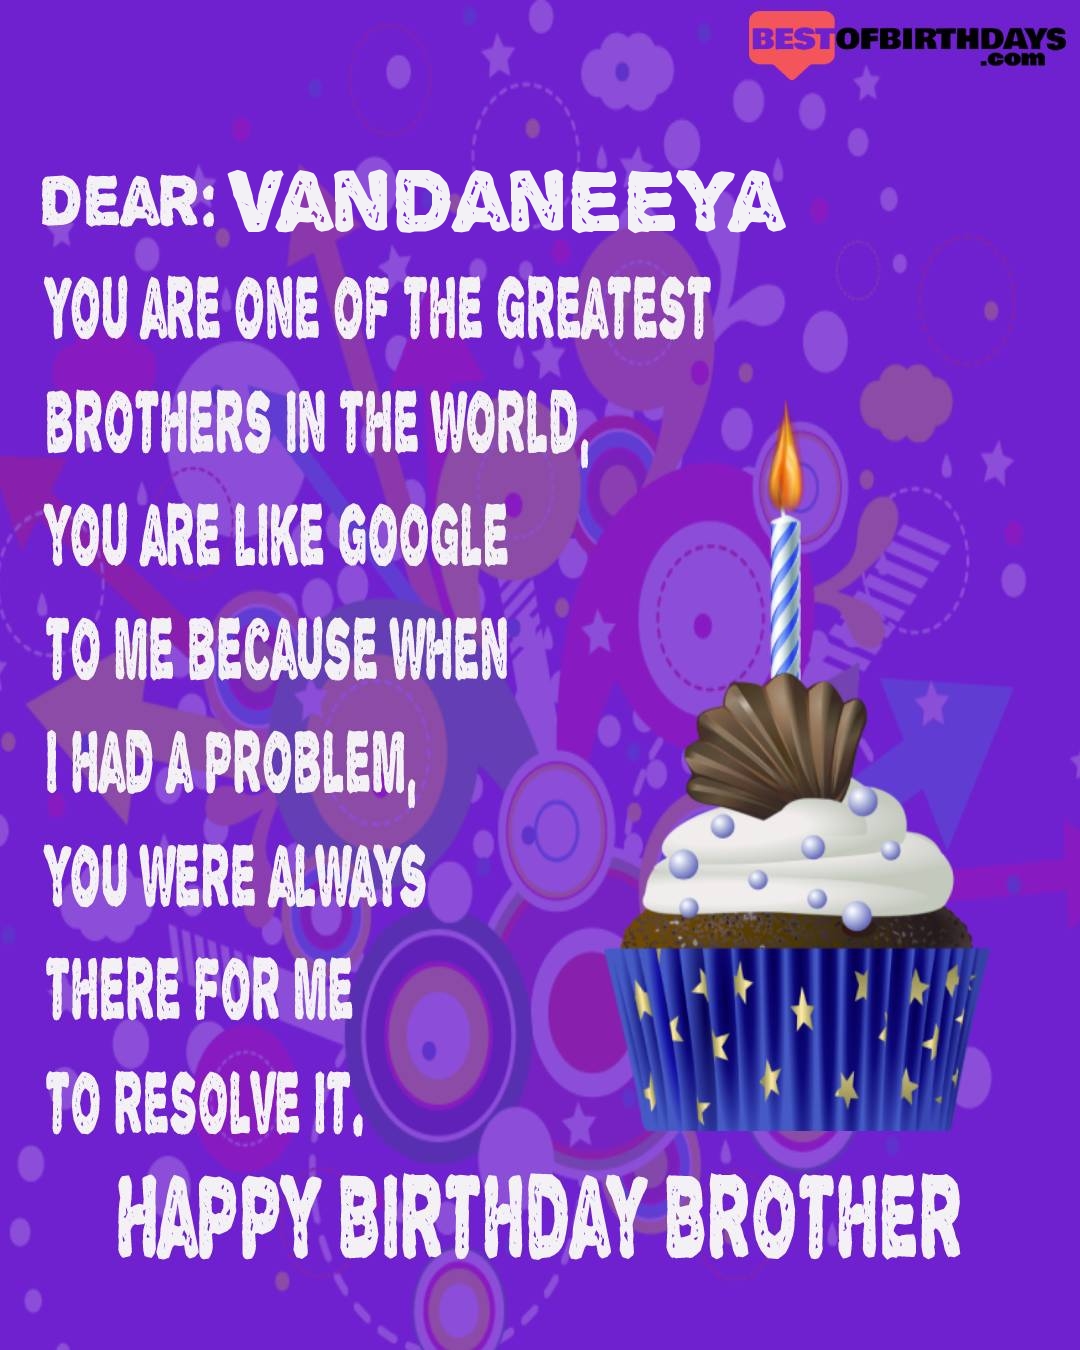 Happy birthday vandaneeya bhai brother bro